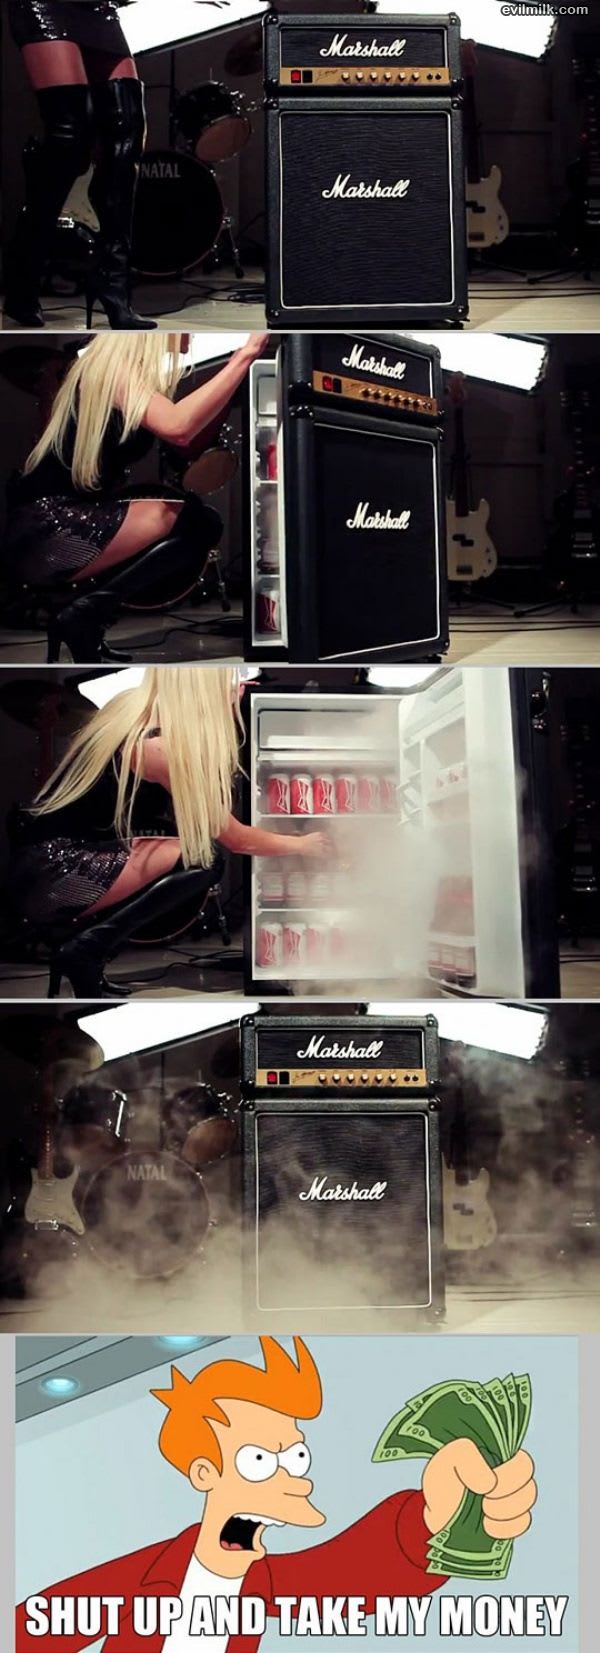 Marshall-fridge-take-my-money.jpg